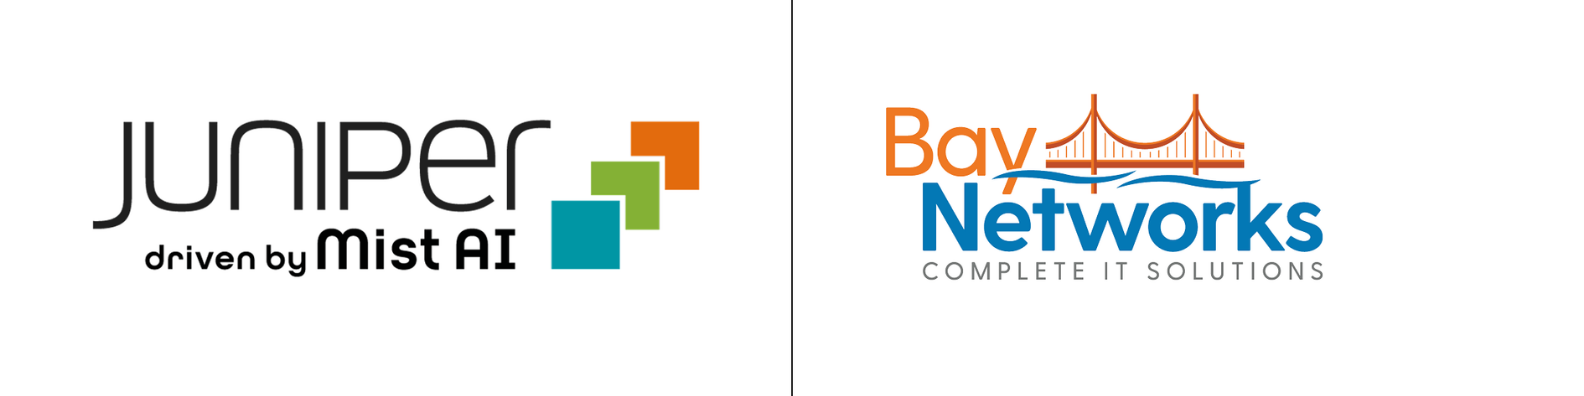 Bay Networks new logo